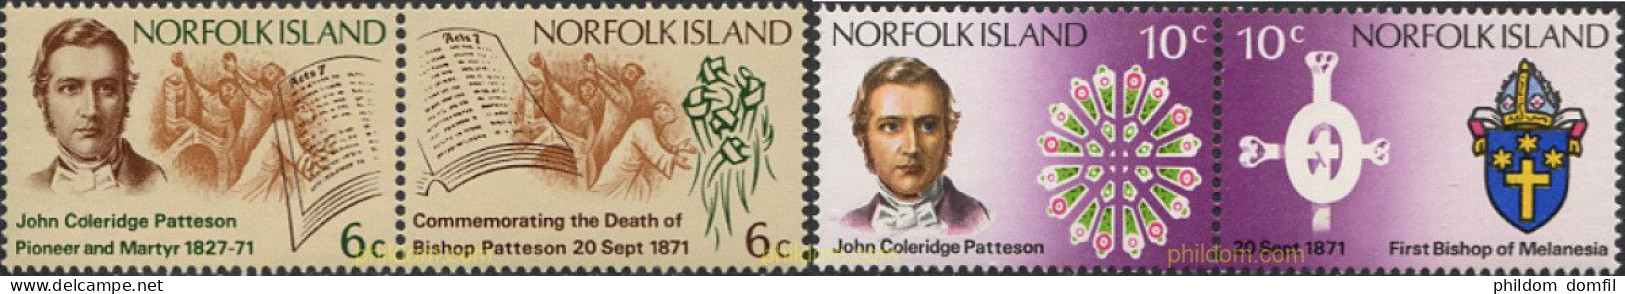 274268 MNH NORFOLK 1971 CENTENARIO DE LA MUERTE DE JOHN COLEREDGEPATTESON - Norfolk Island